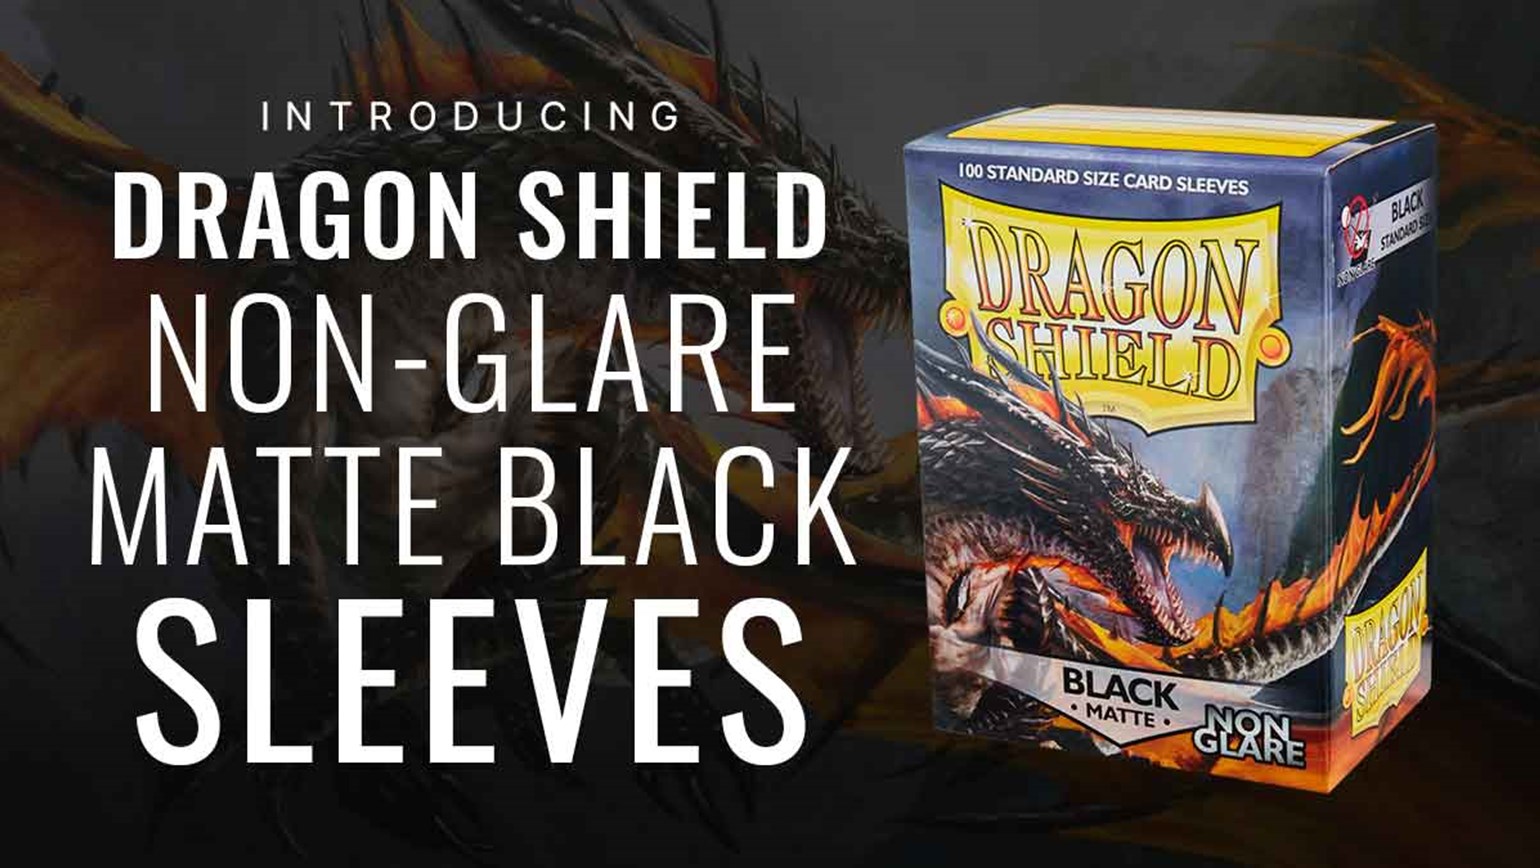 Dragon Shield Non-Glare Matte Black ‘Amina’ Sleeves Added to TCGplayer Catalog